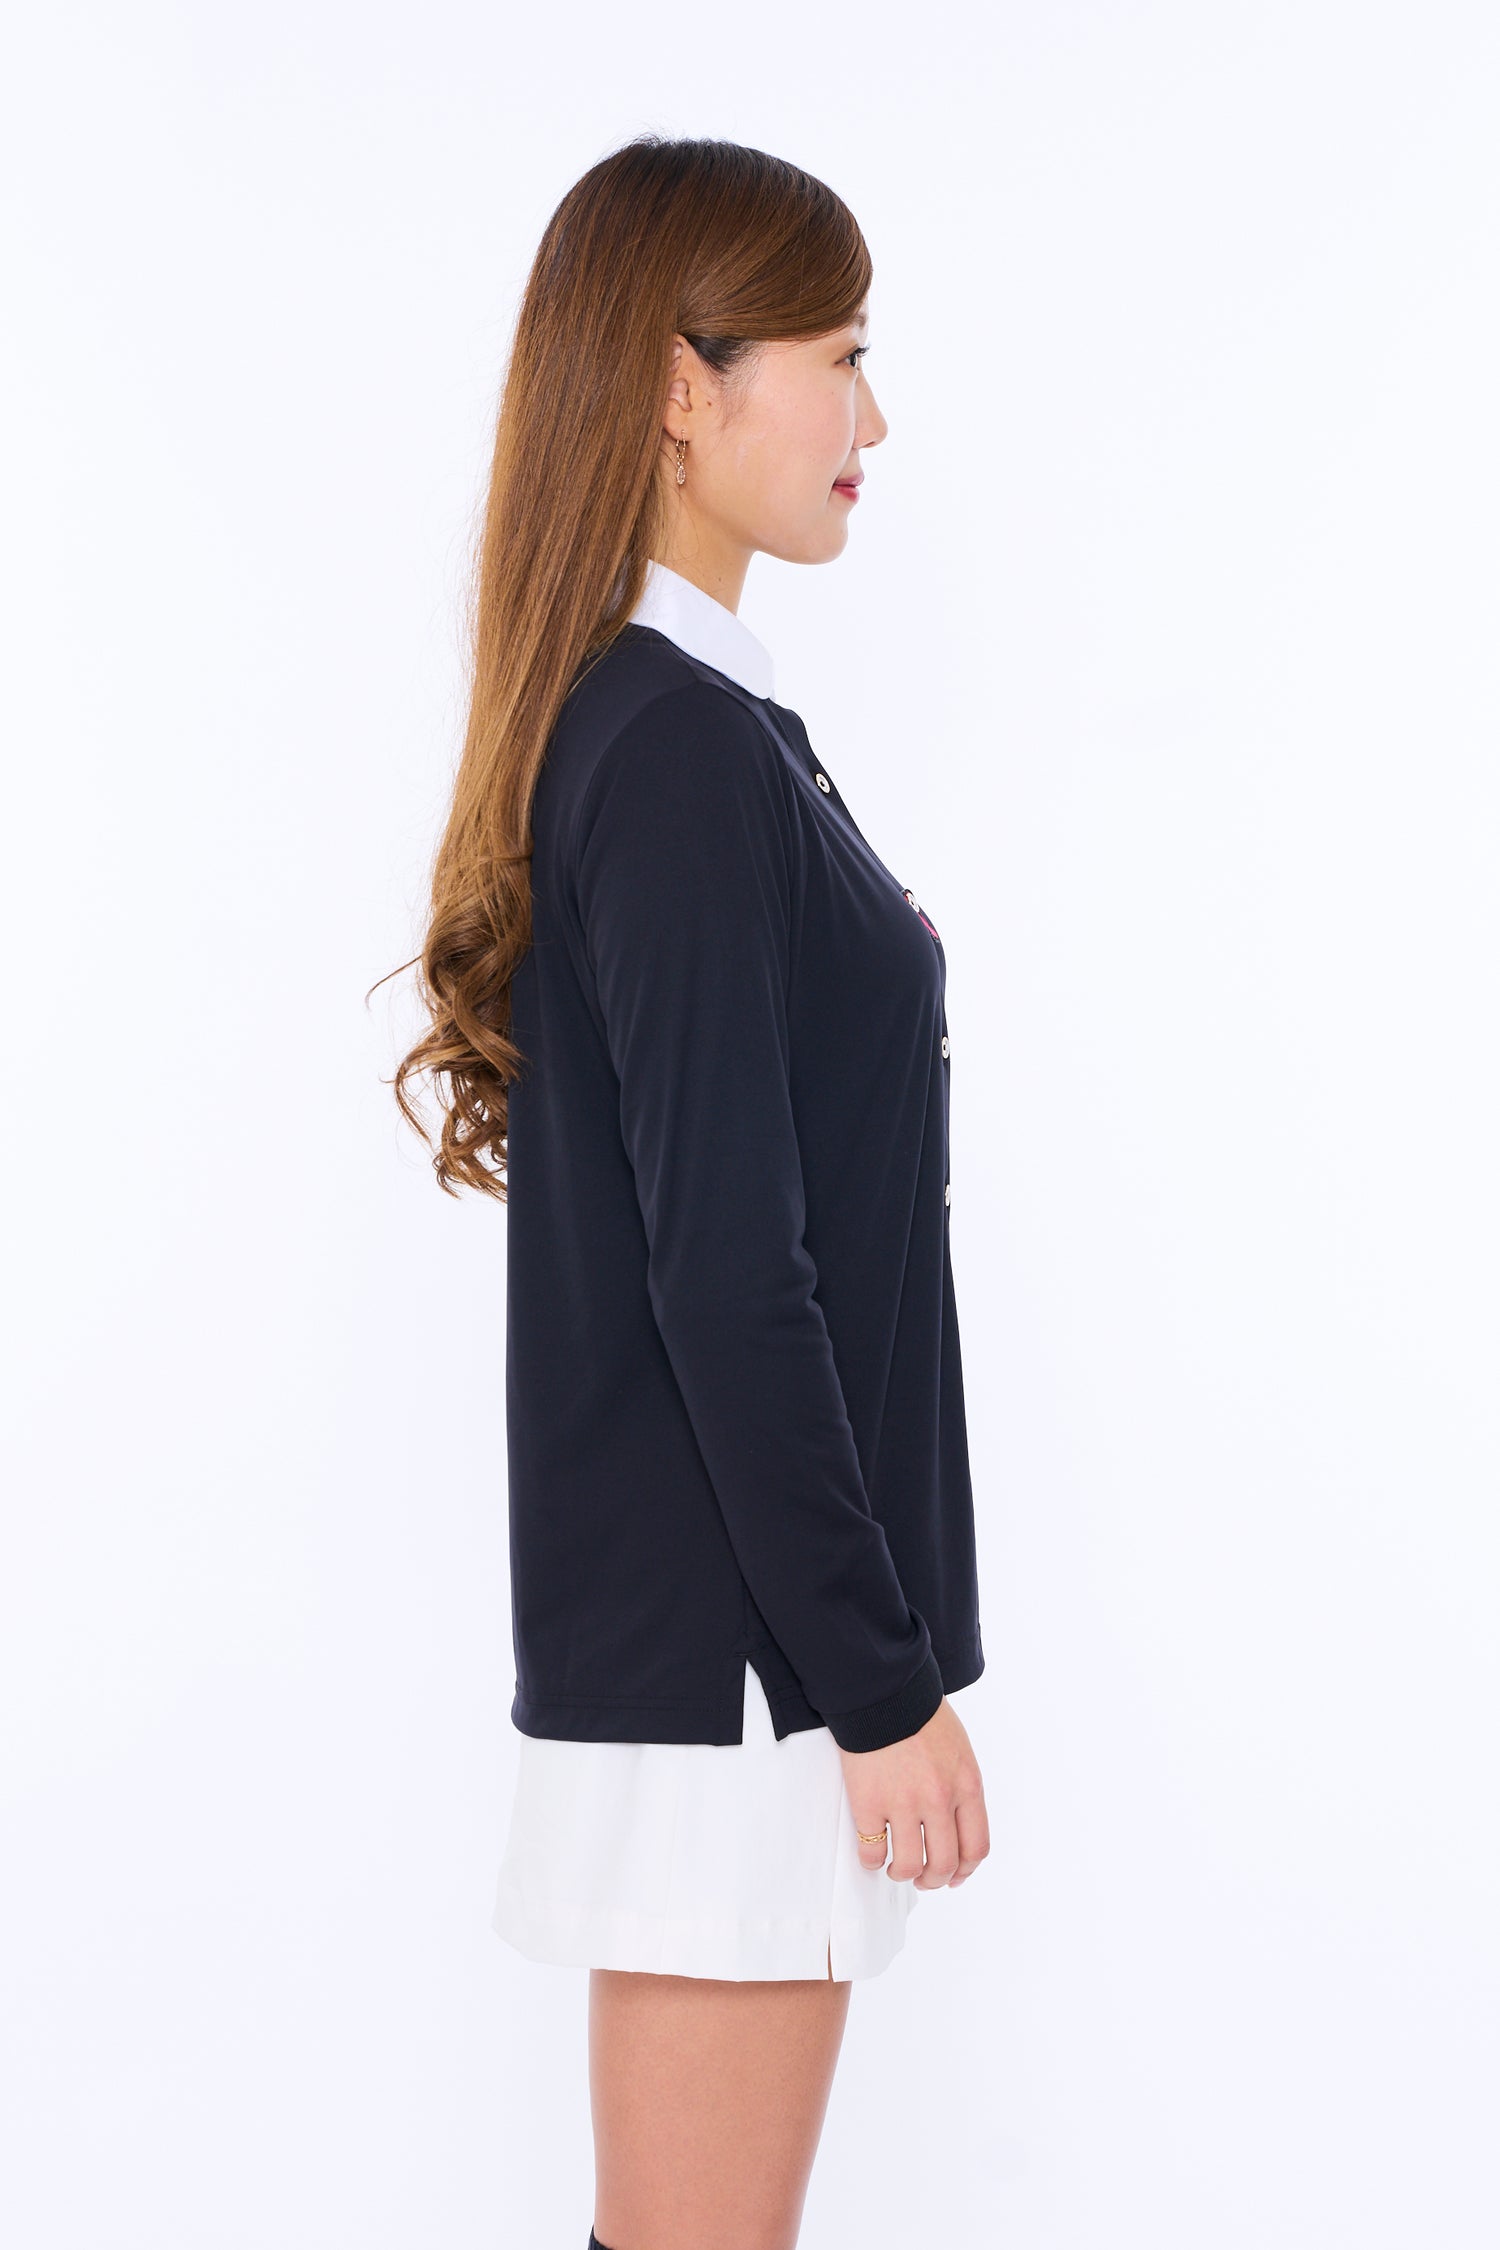 Round collar long sleeve shirt (801H2050)